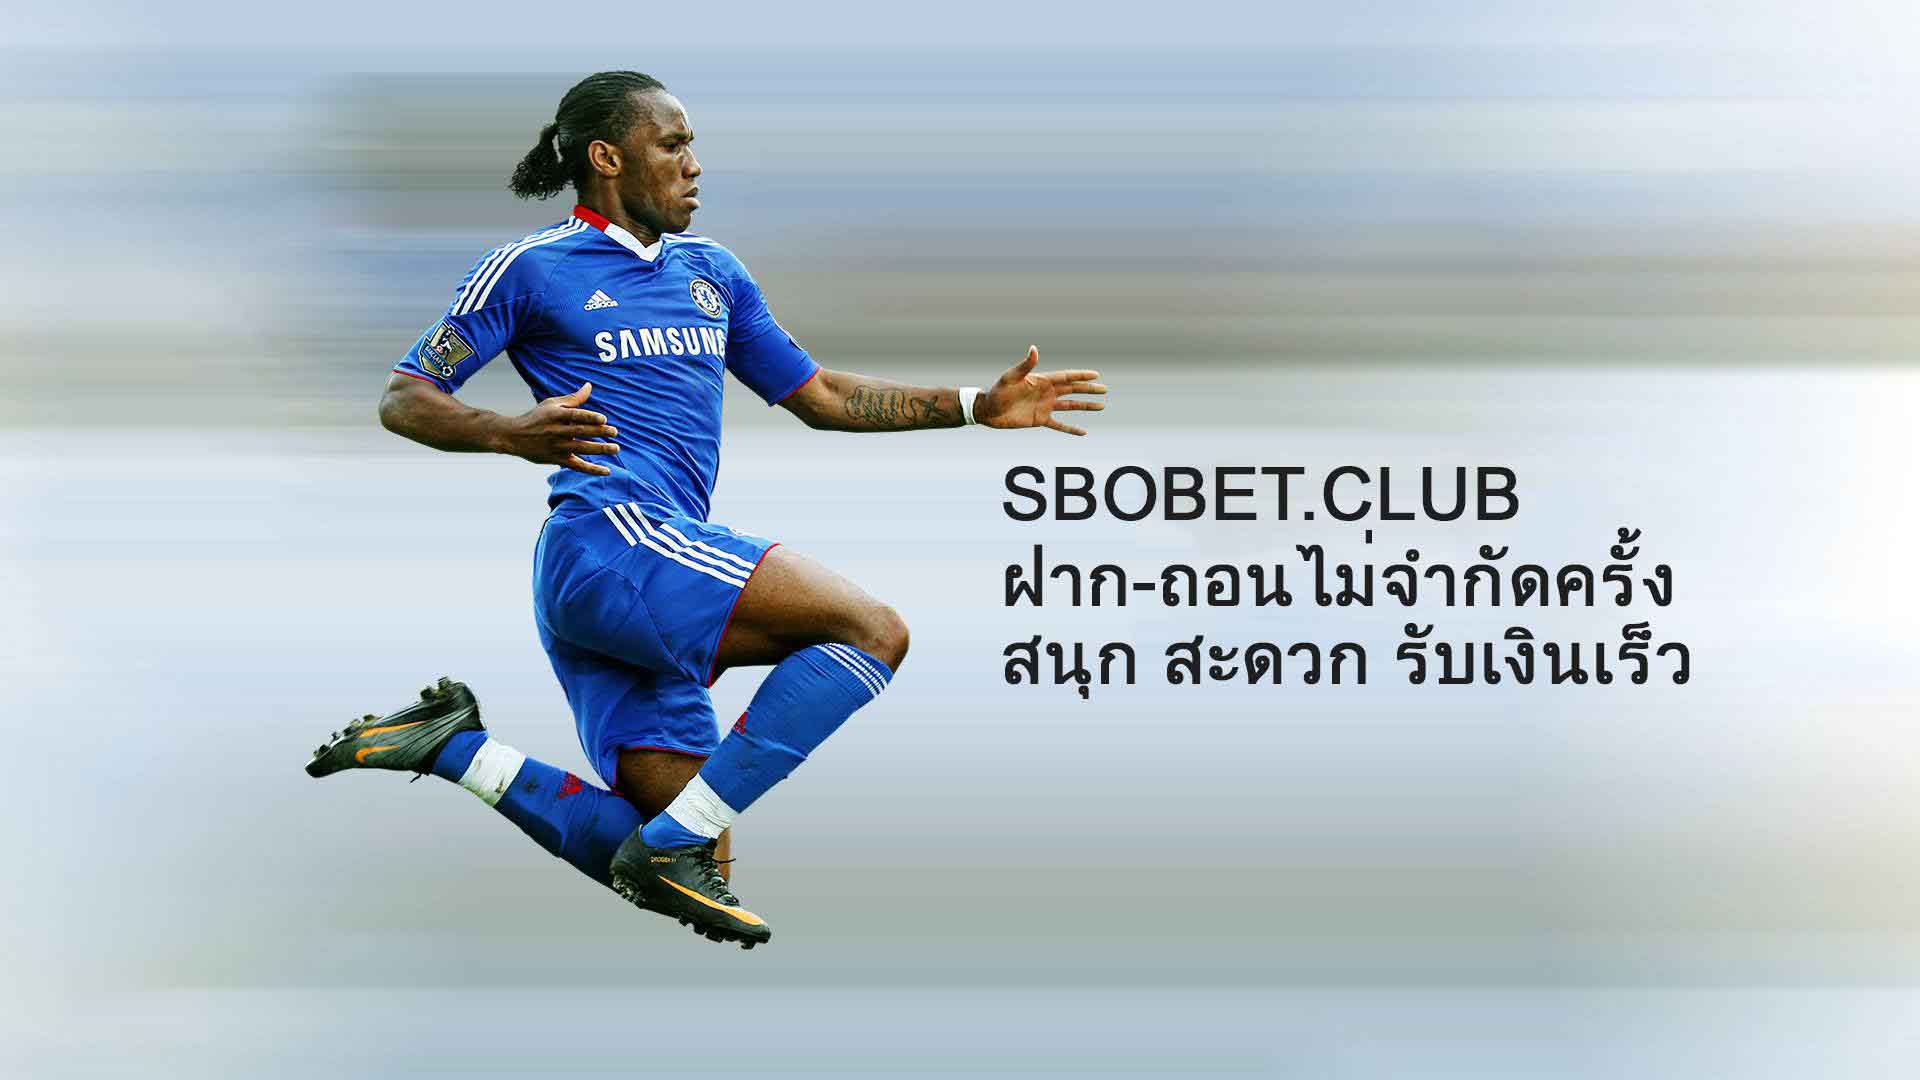 sbobet club ball only